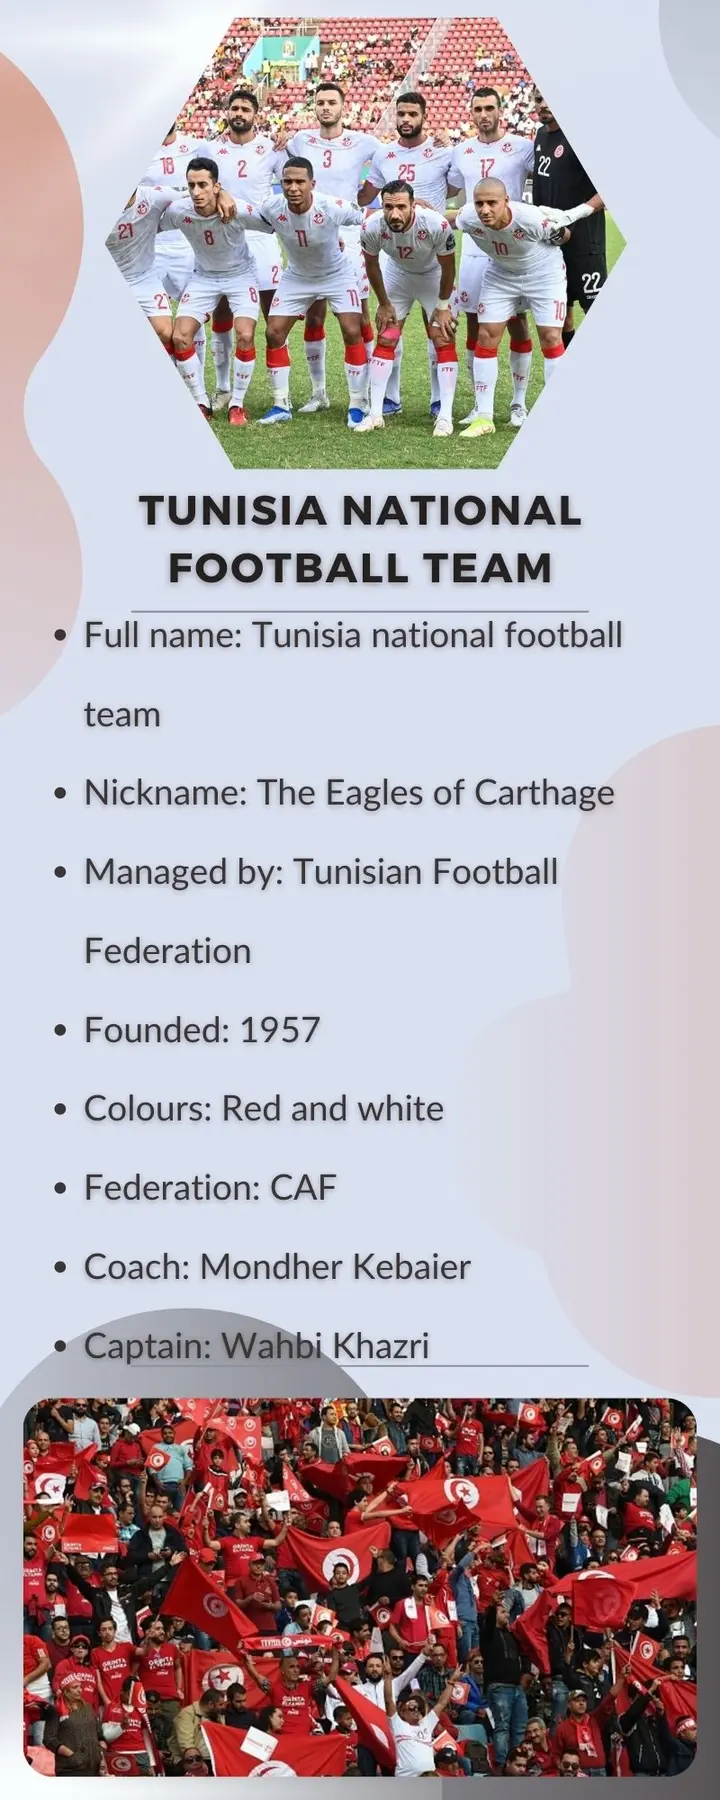 Tunisia National Football team